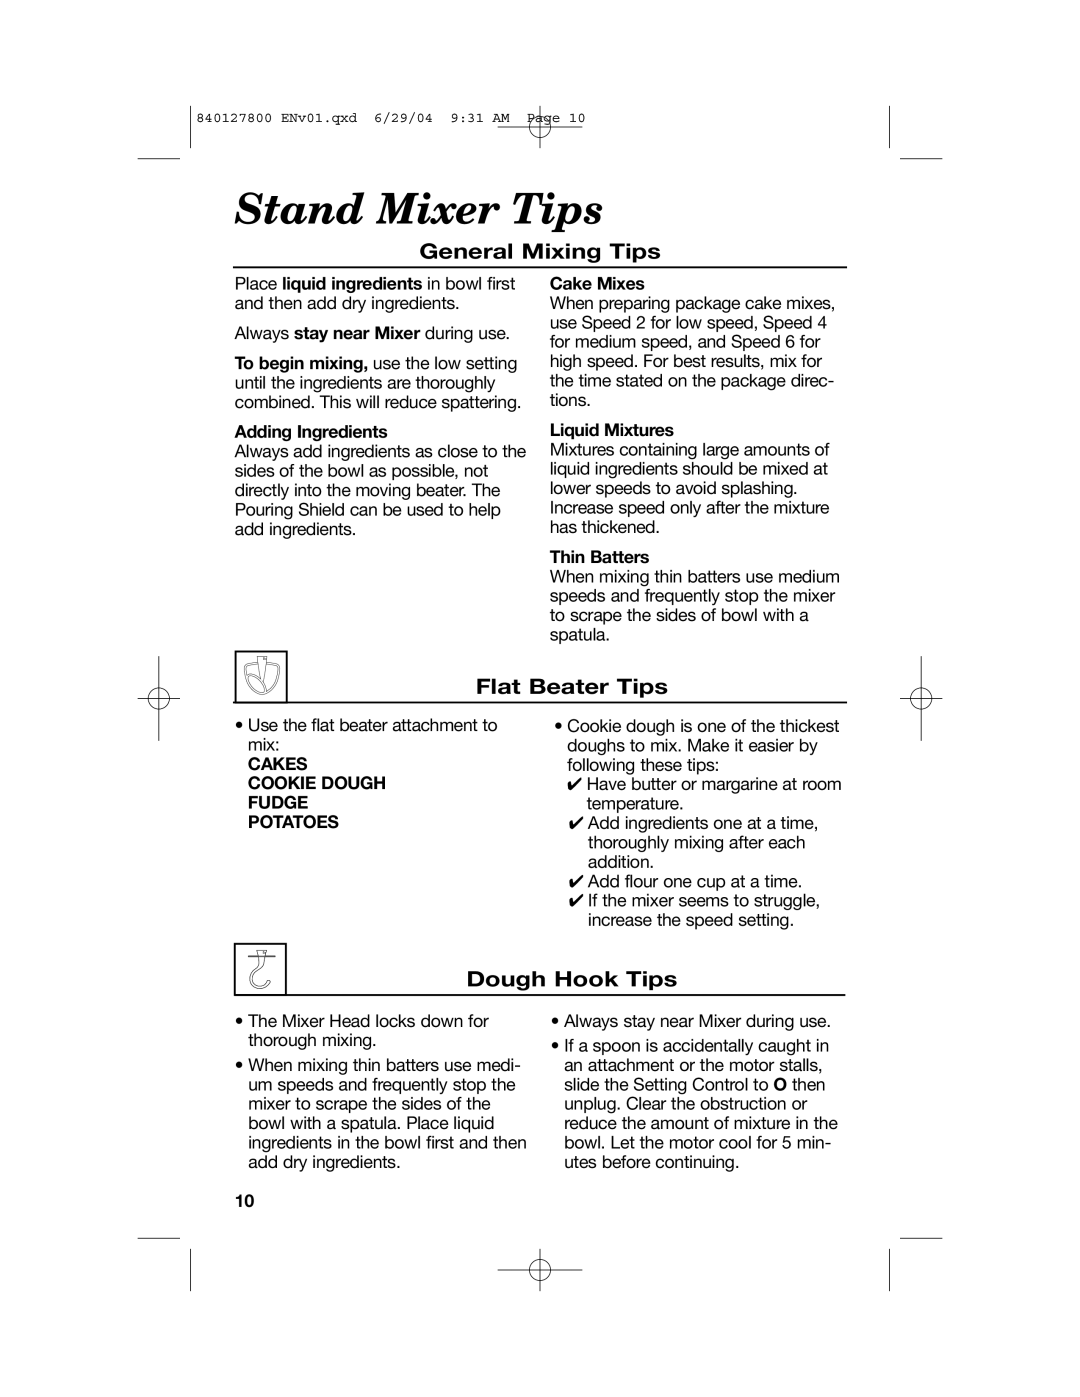 Hamilton Beach 63225 manual Stand Mixer Tips, General Mixing Tips, Flat Beater Tips, Dough Hook Tips, Adding Ingredients 